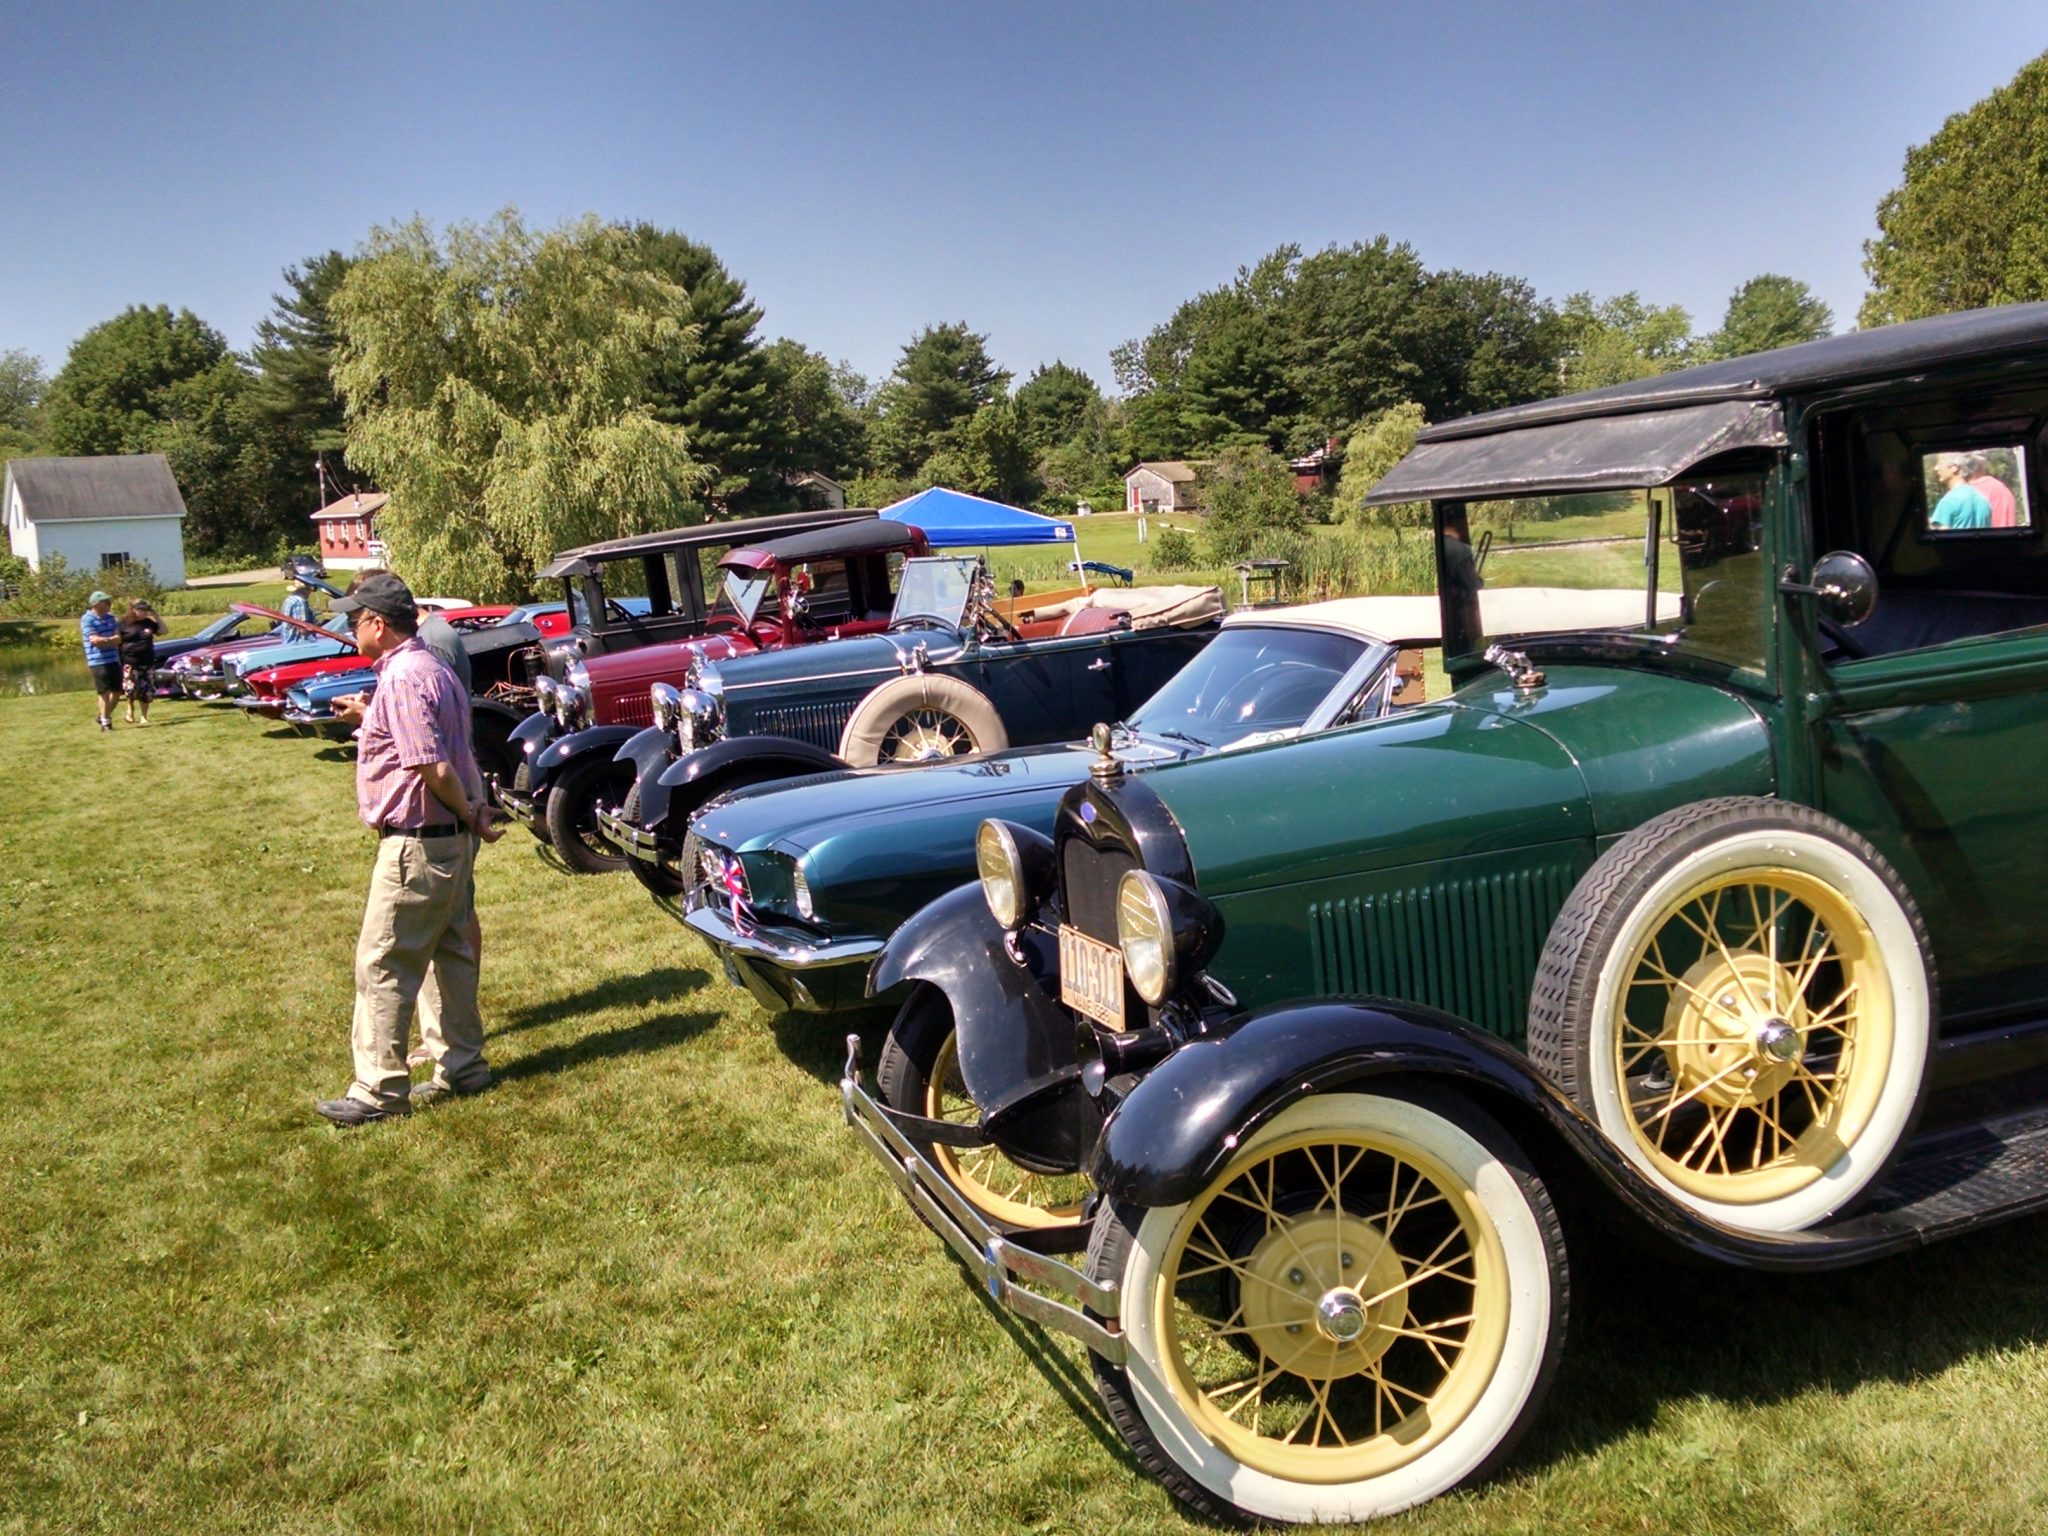 54th Annual Antique Auto Days